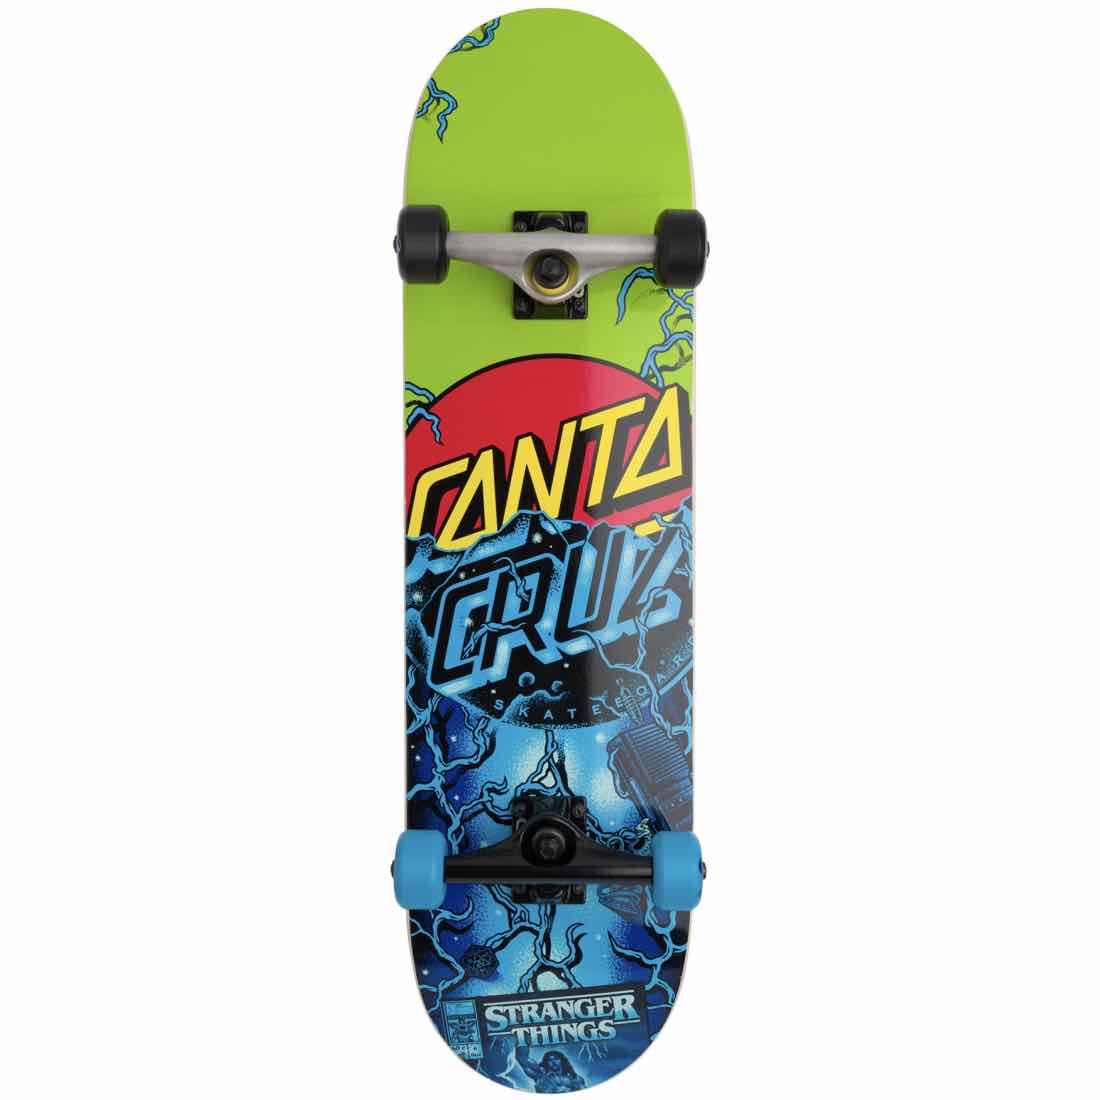 Flame Dot Large 8.25" Santa Cruz Complete Skateboard 